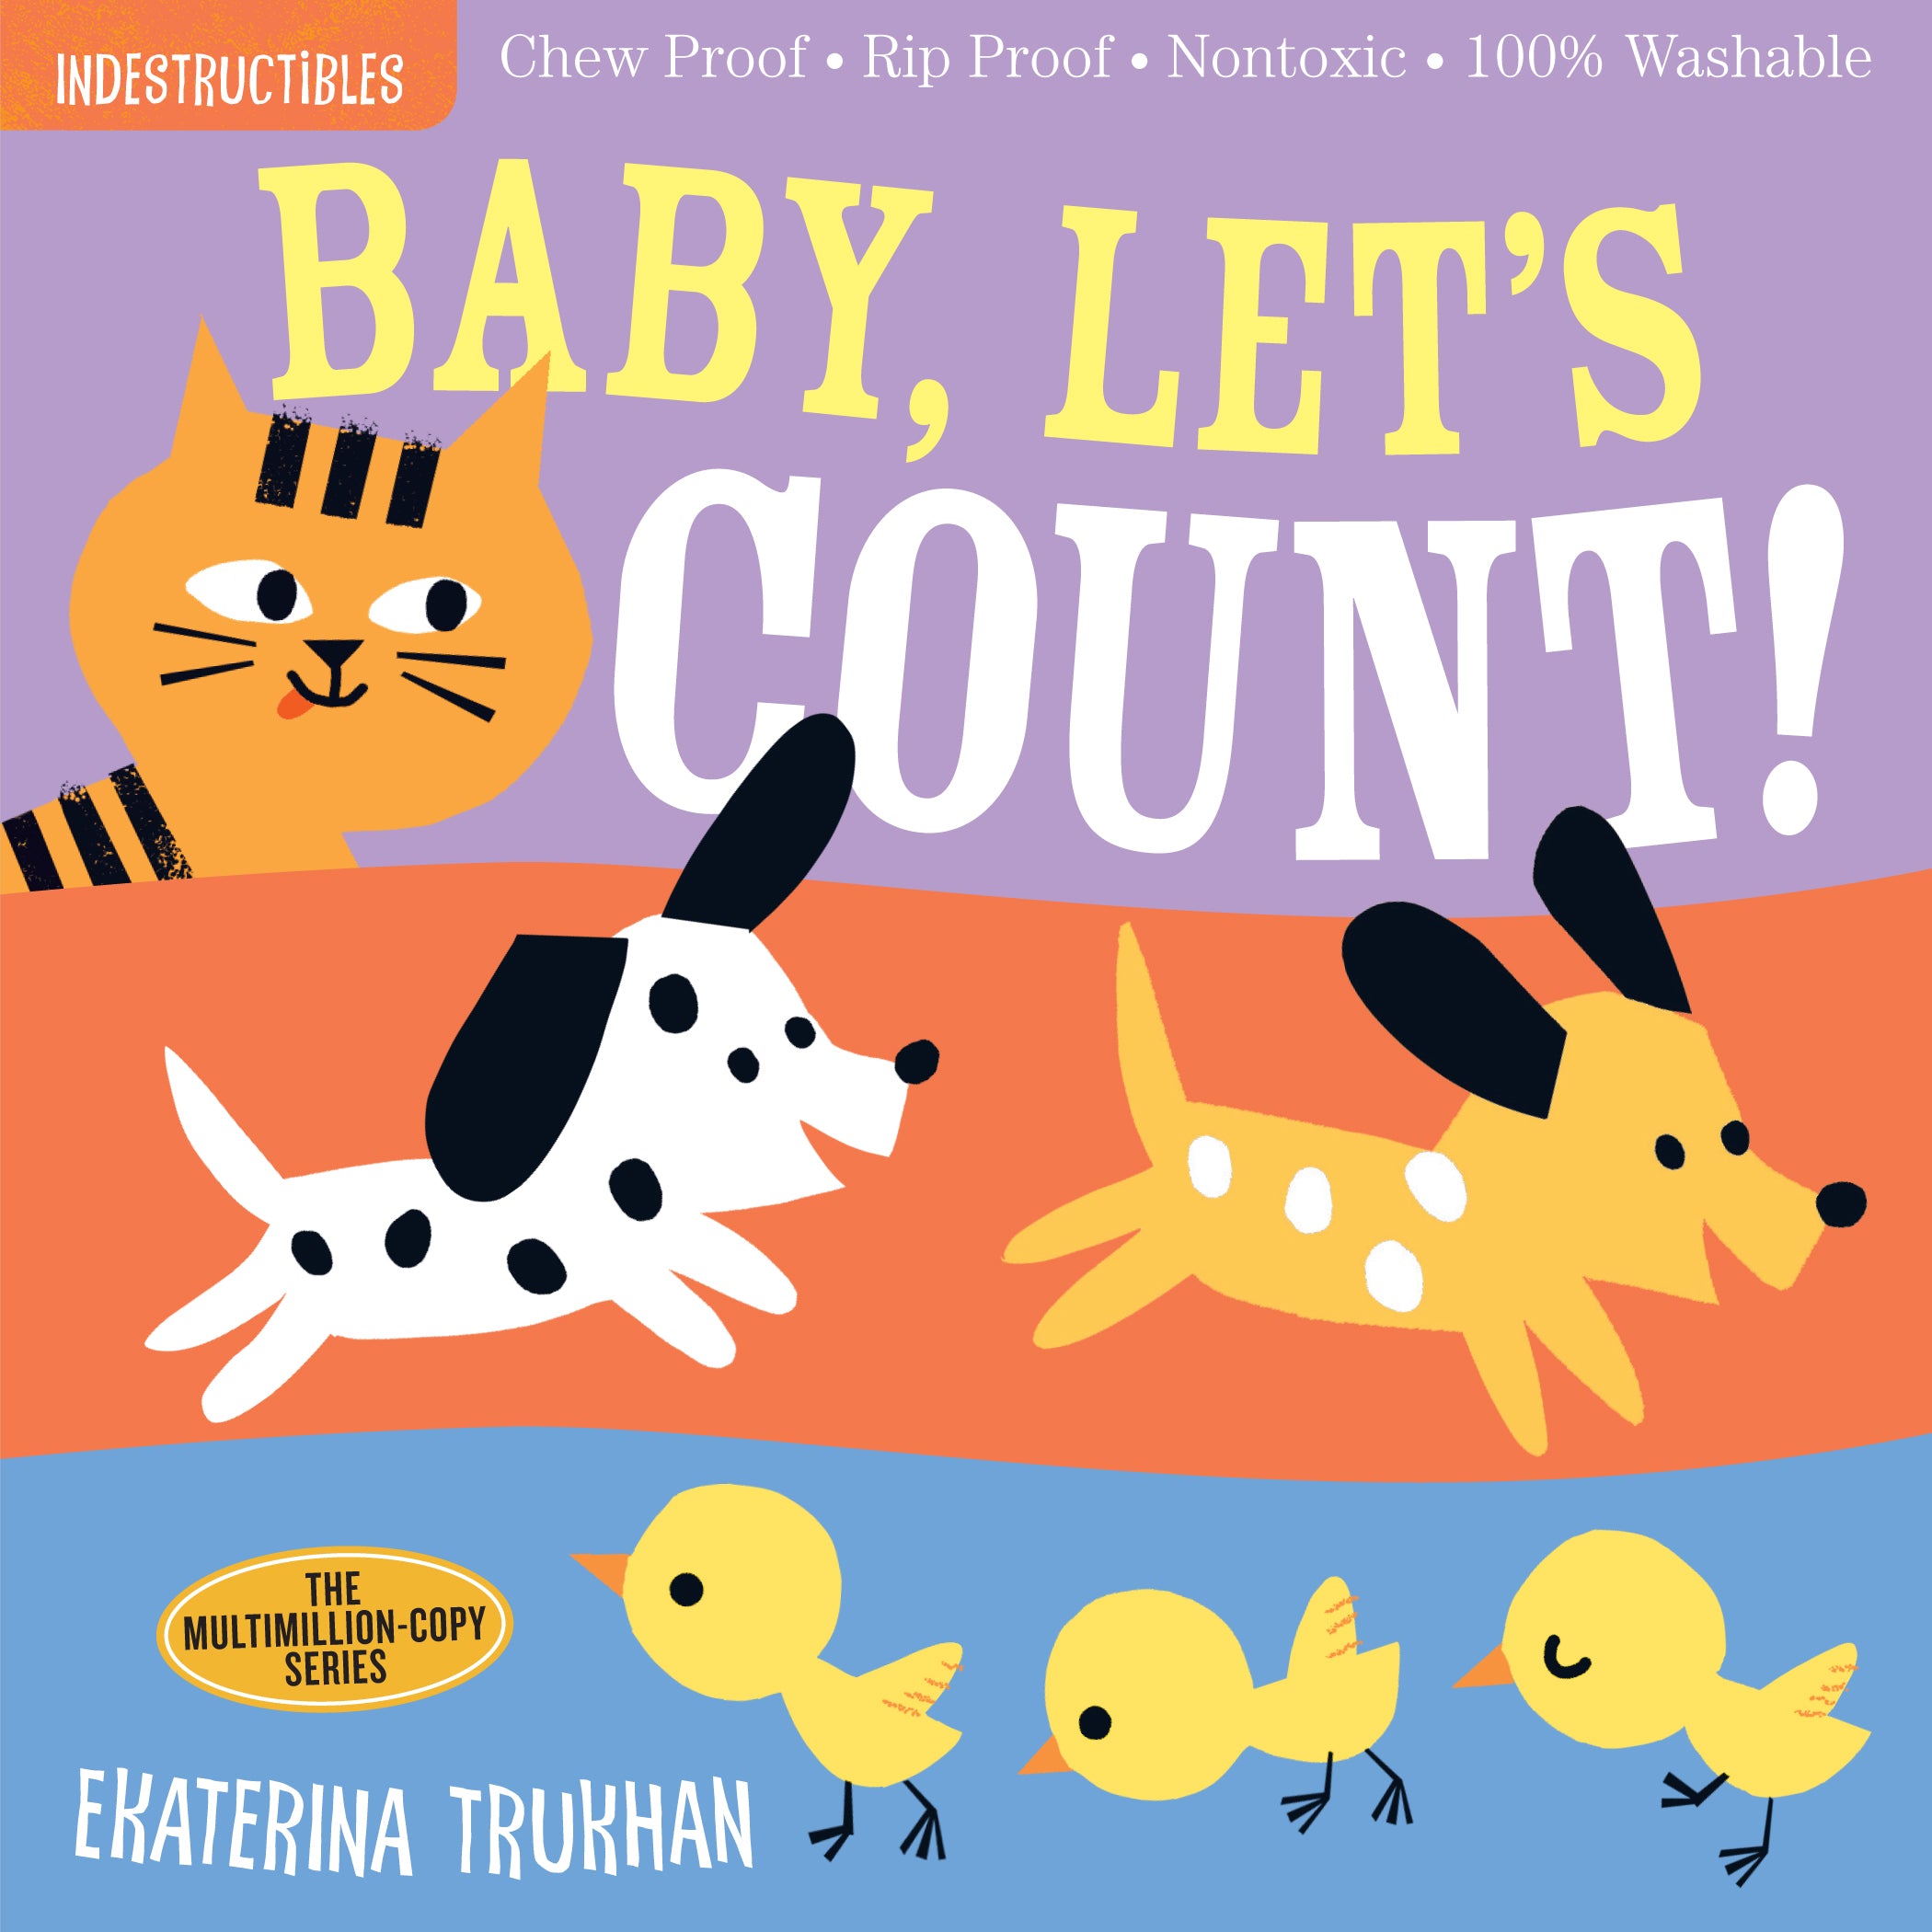 Indestructibles Book - Baby Let's Count